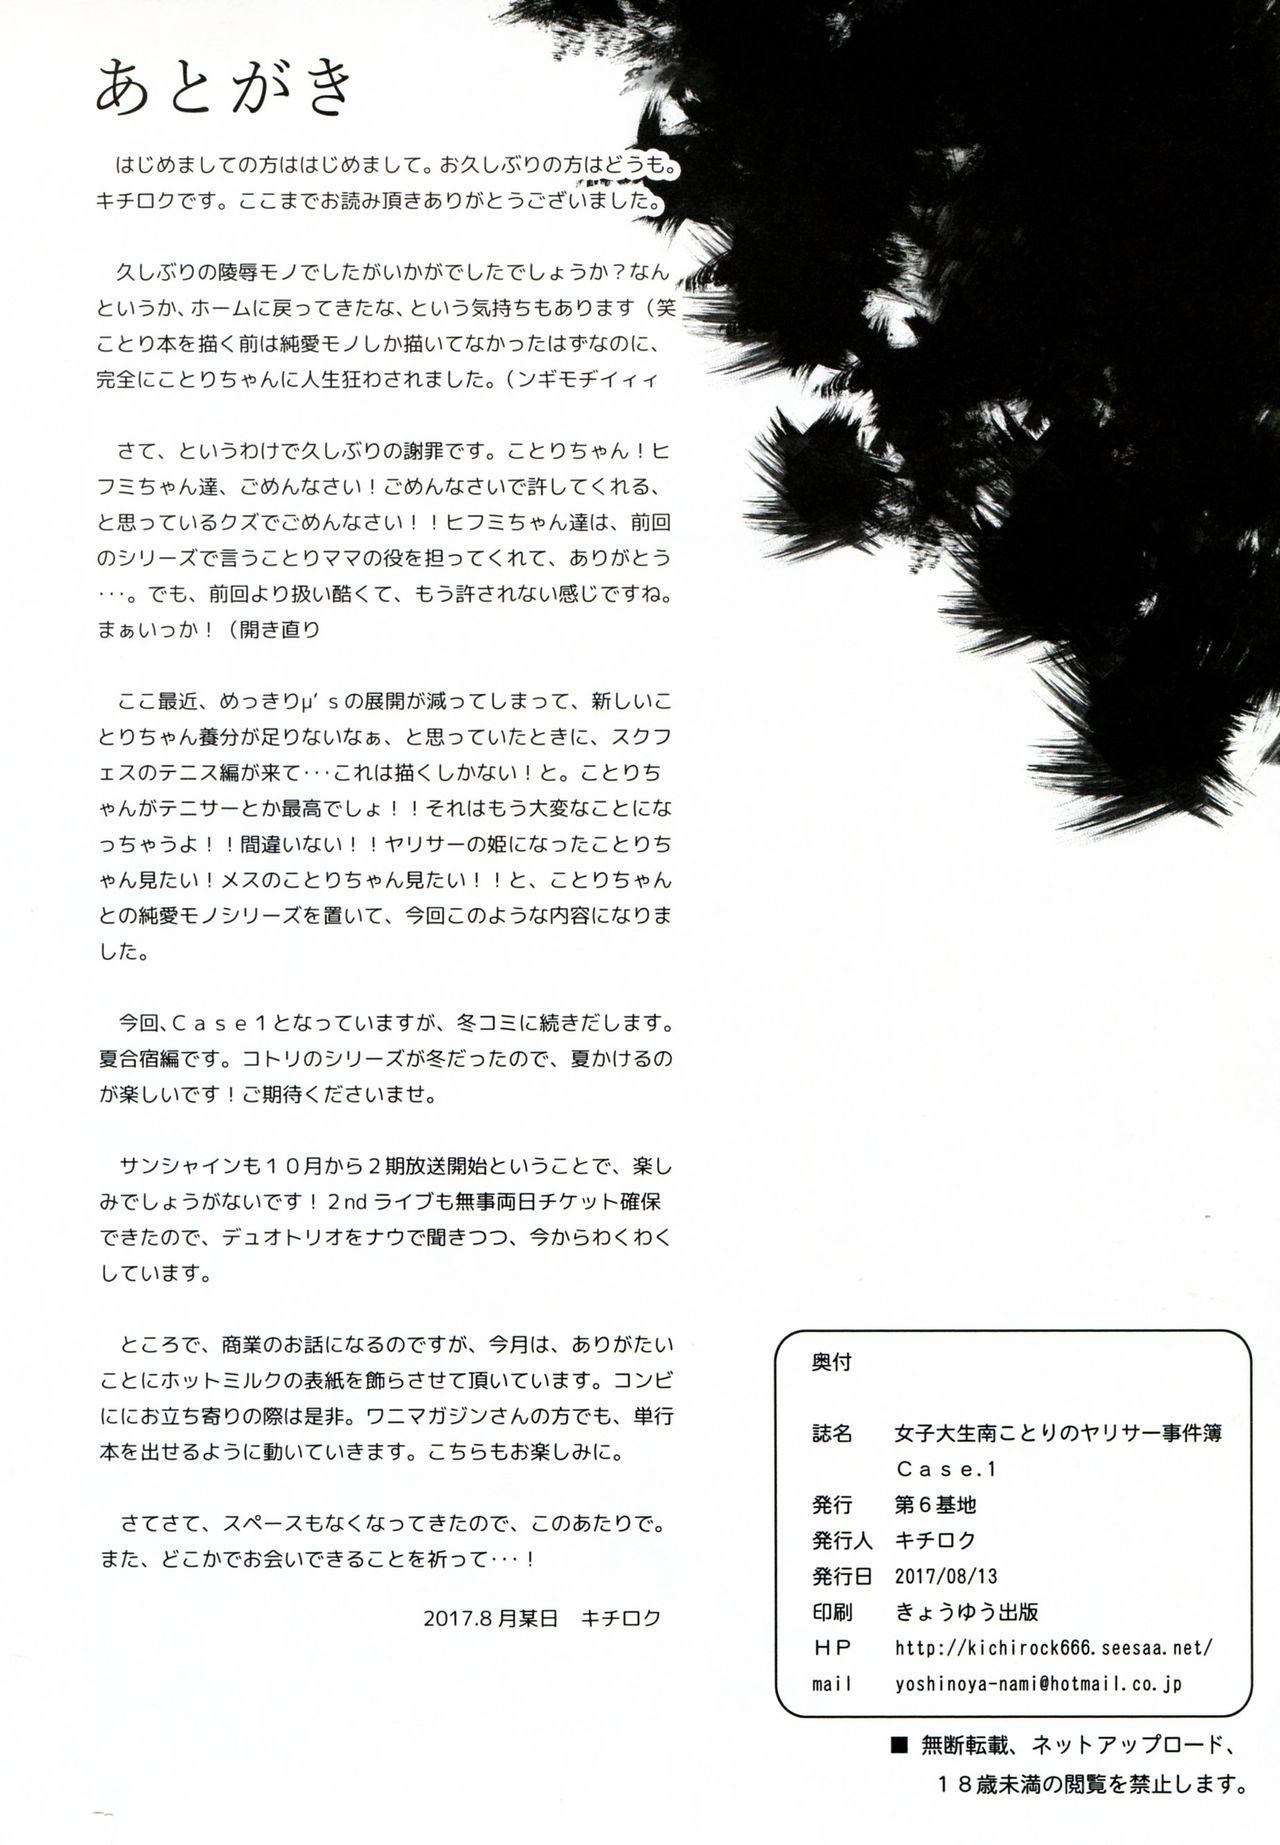 Joshidaisei Minami Kotori no YariCir Jikenbo Case. 1 | College Girl Kotori Minami's Hookup Circle Incident Record Book Case. 1 37